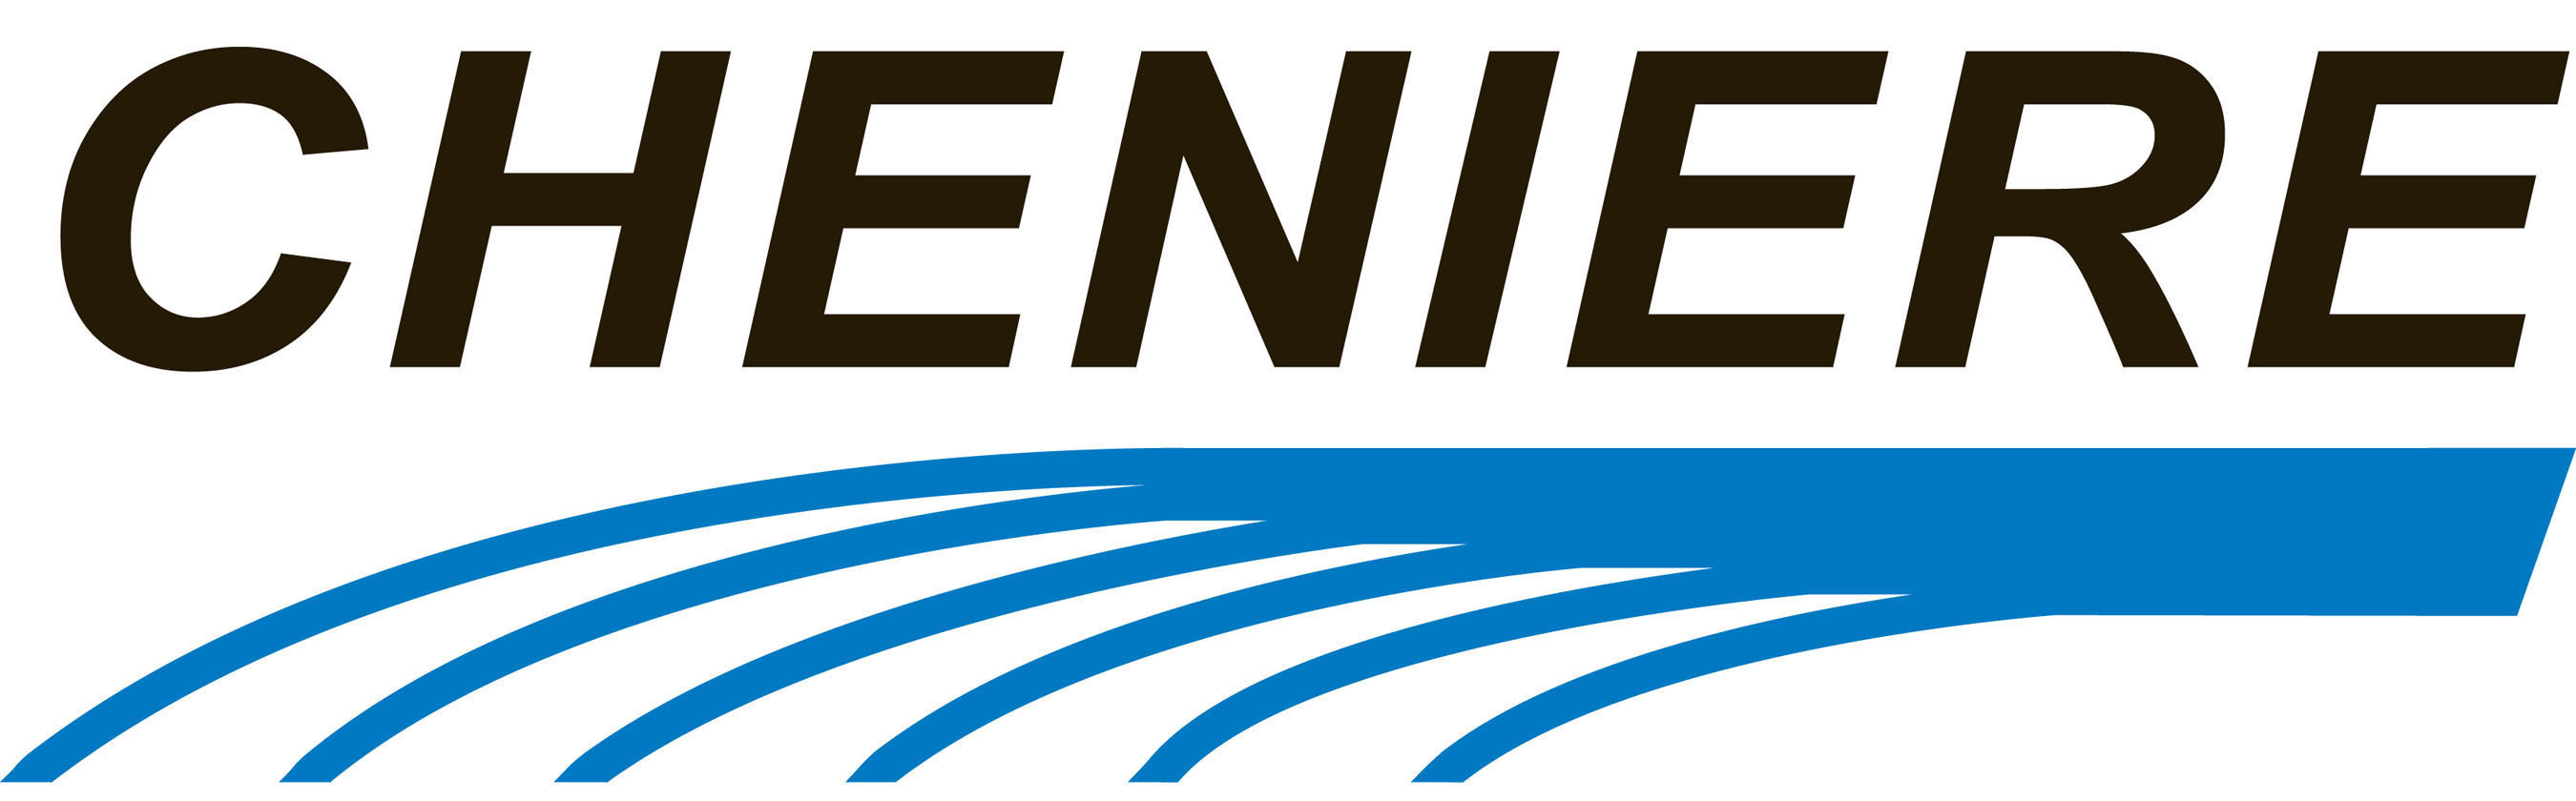 Cheniere Energy logo. (PRNewsFoto/CHENIERE ENERGY) (PRNewsFoto/)